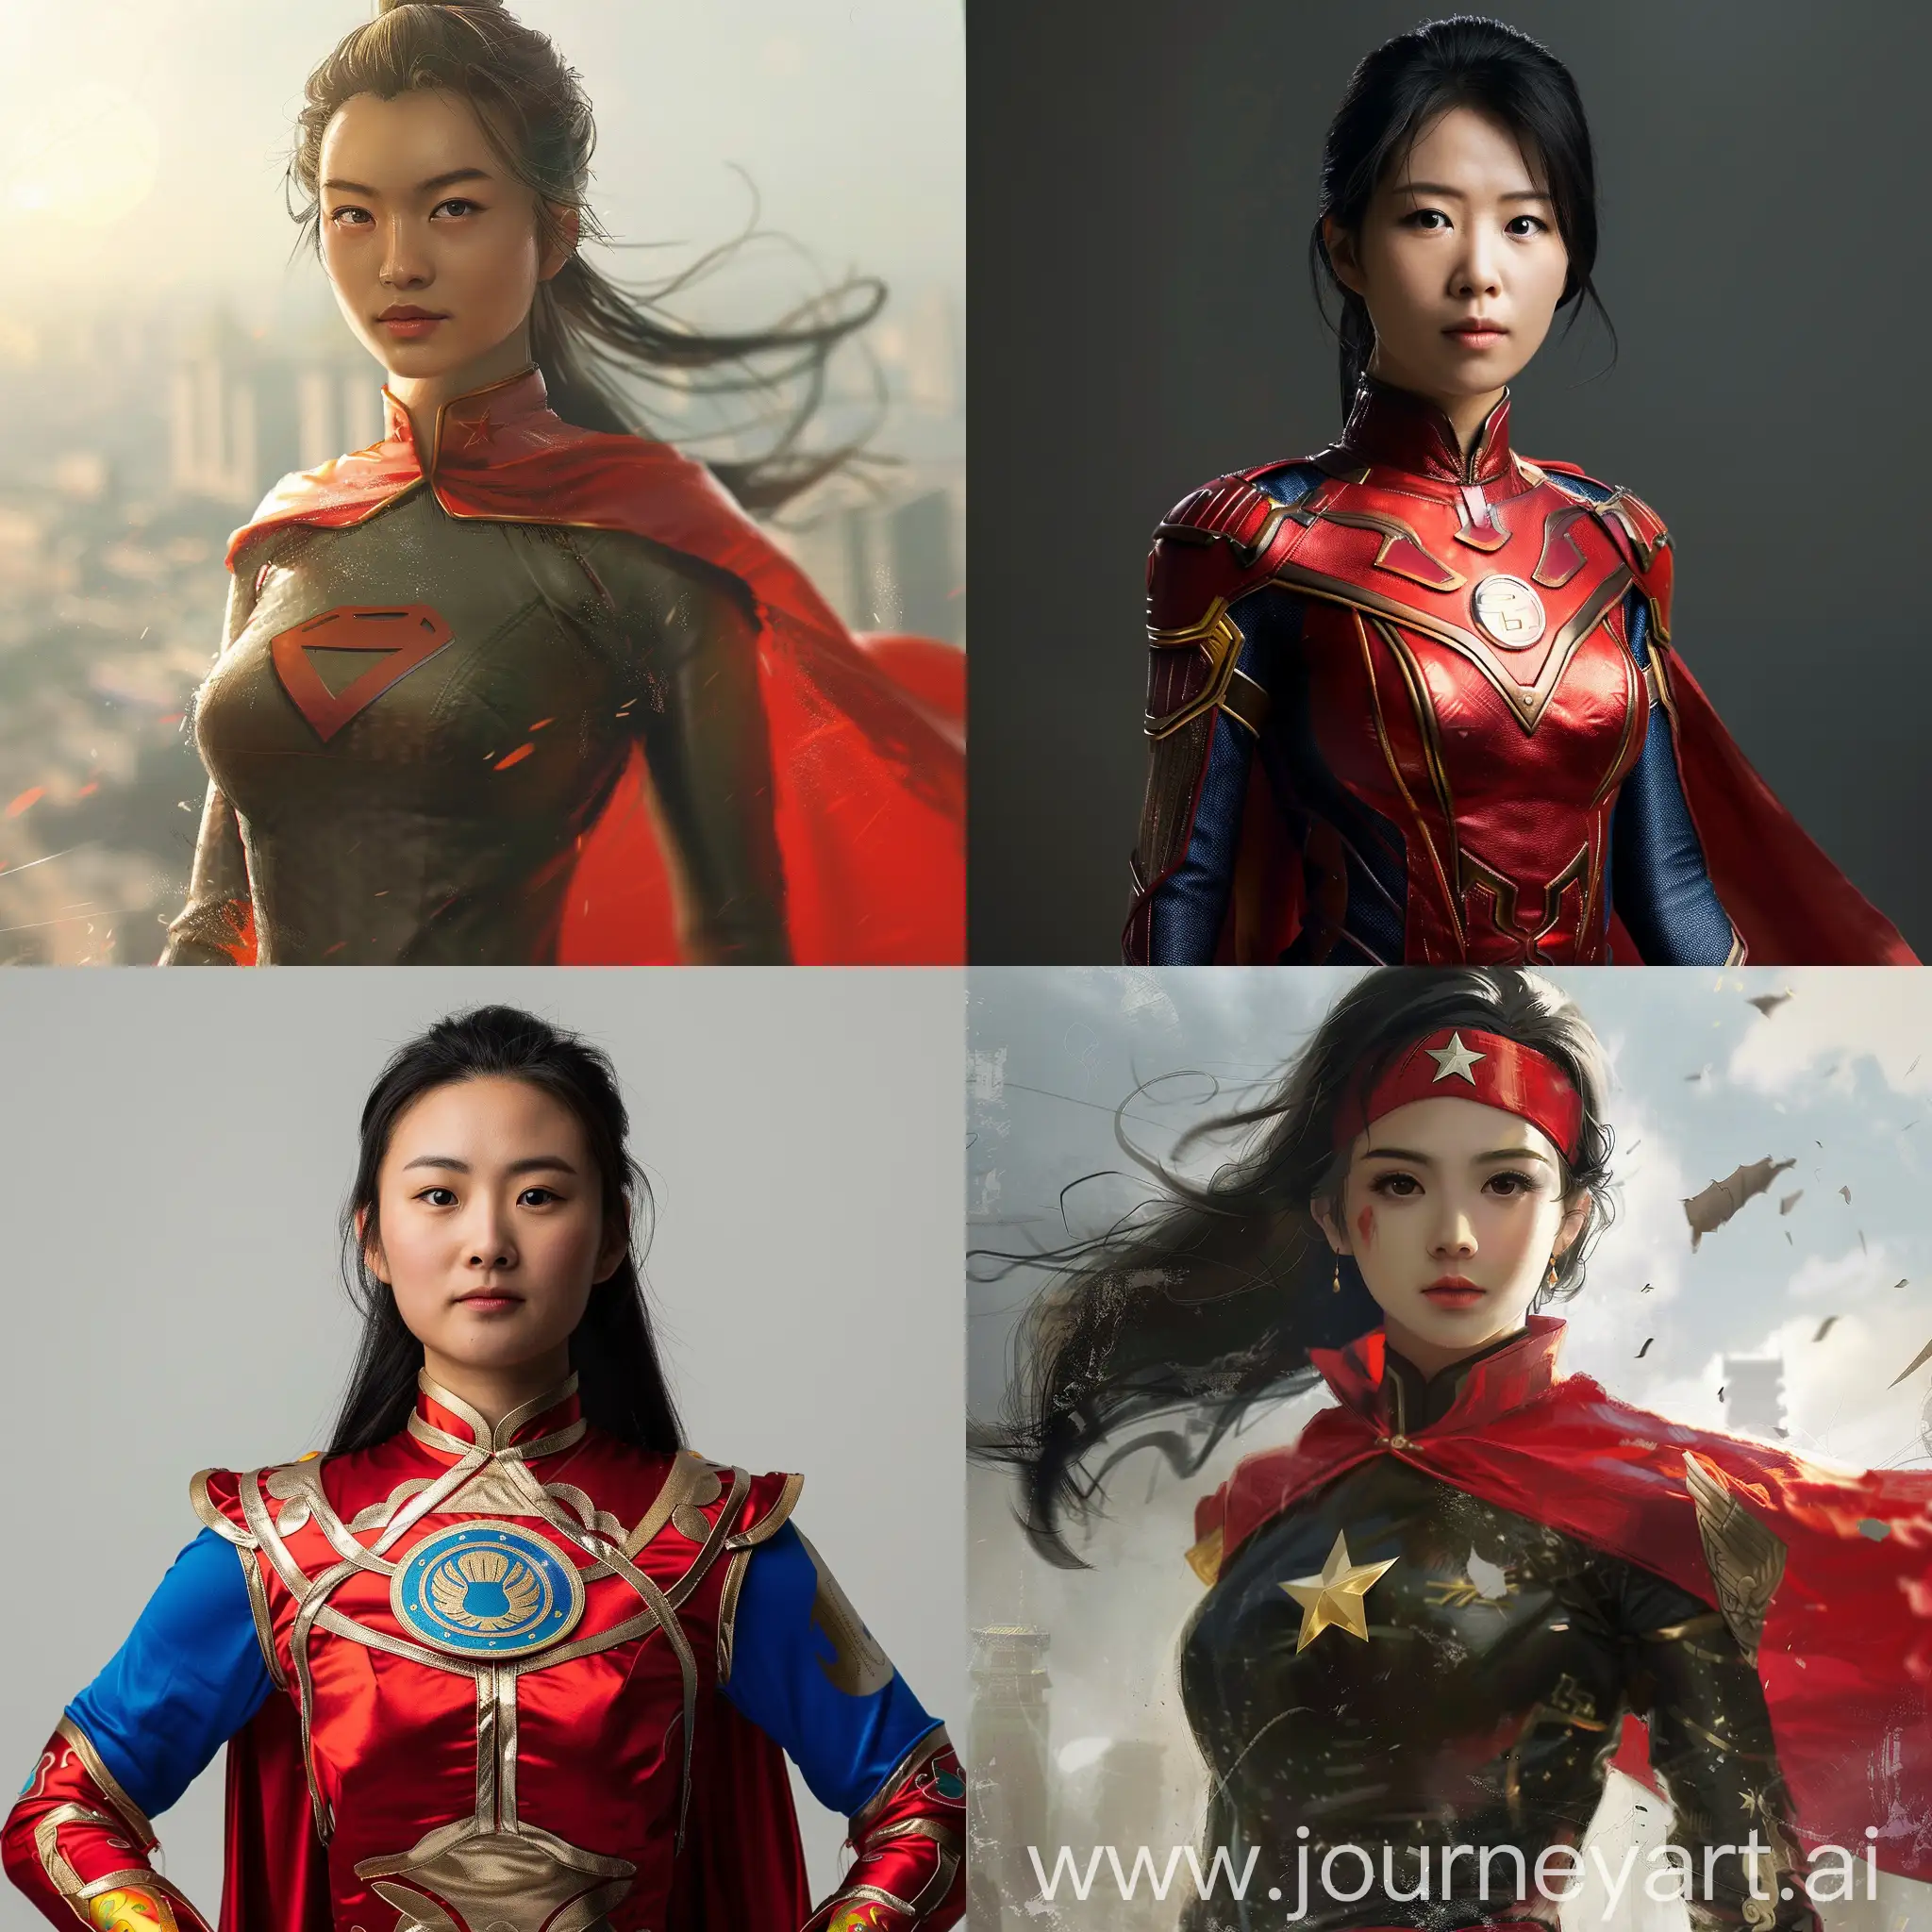 a chinese superwoman